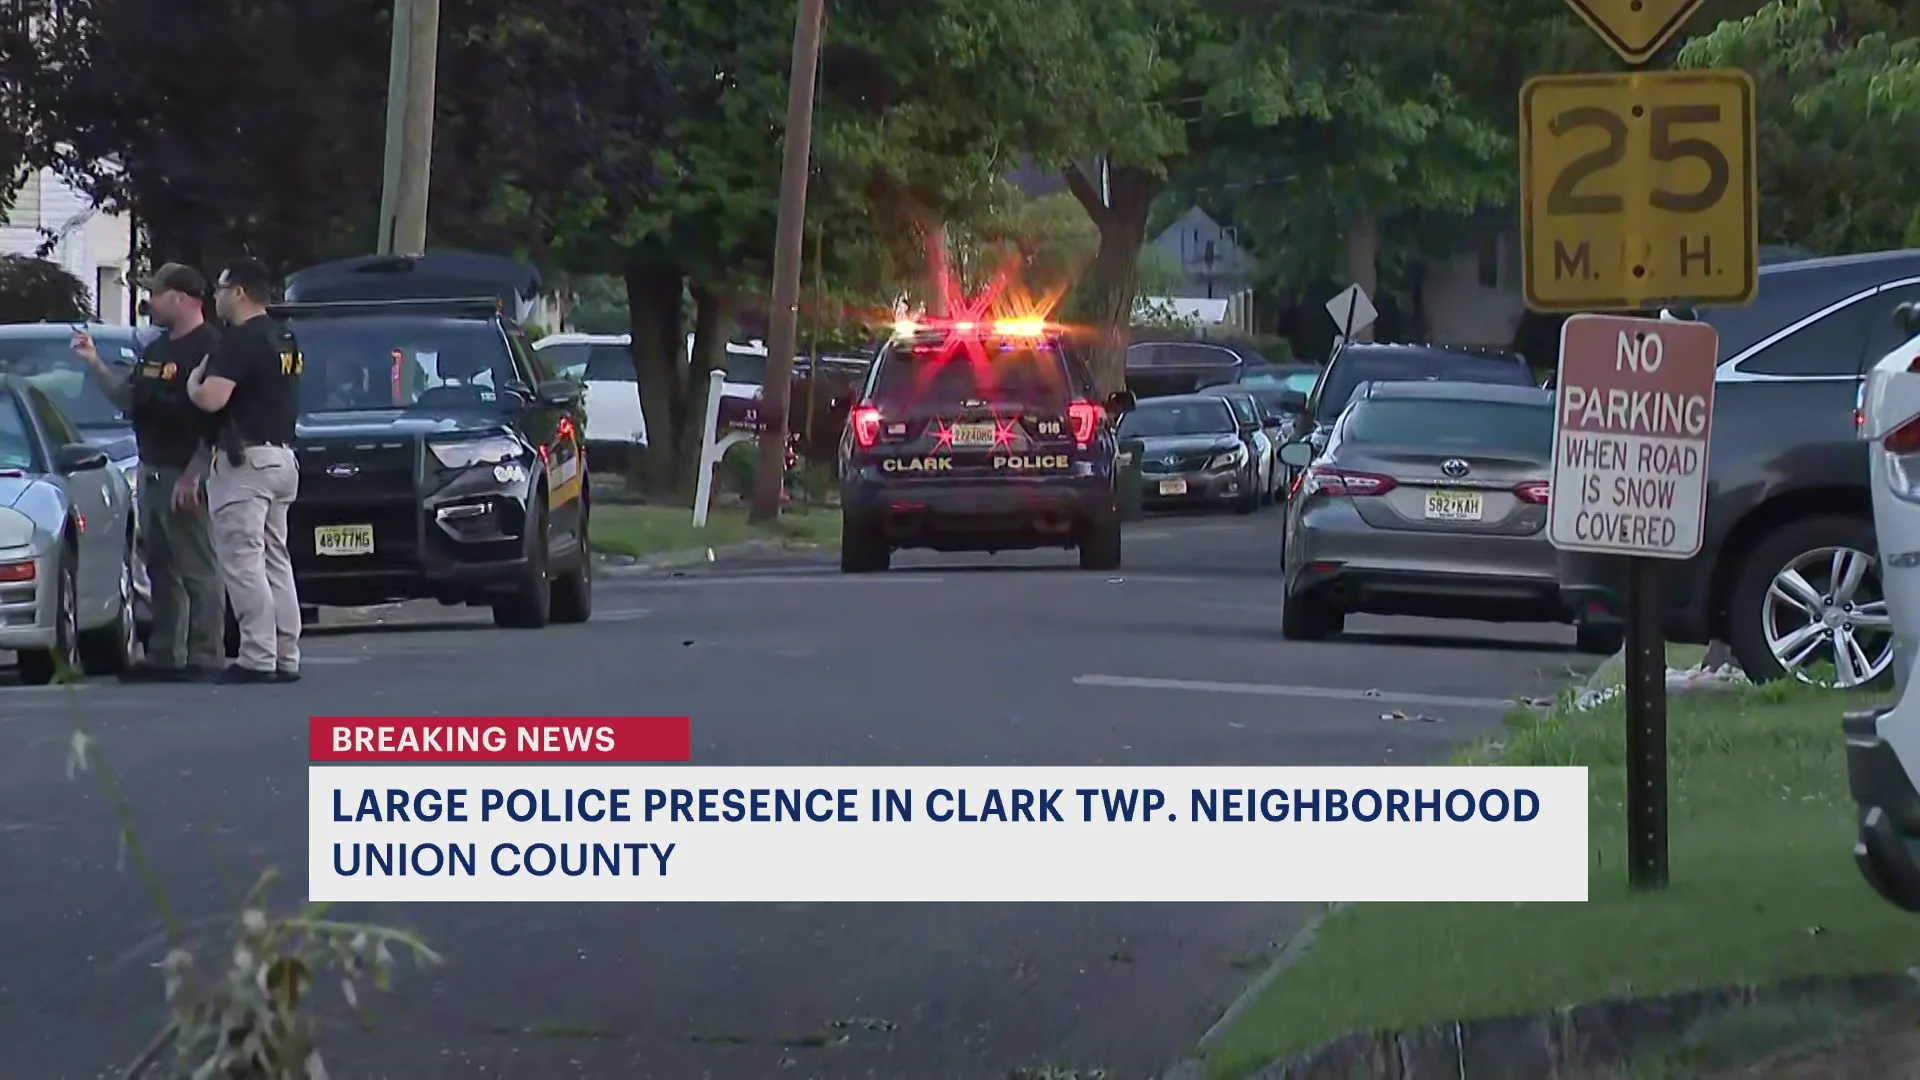 Large police presence descends in Clark neighborhood